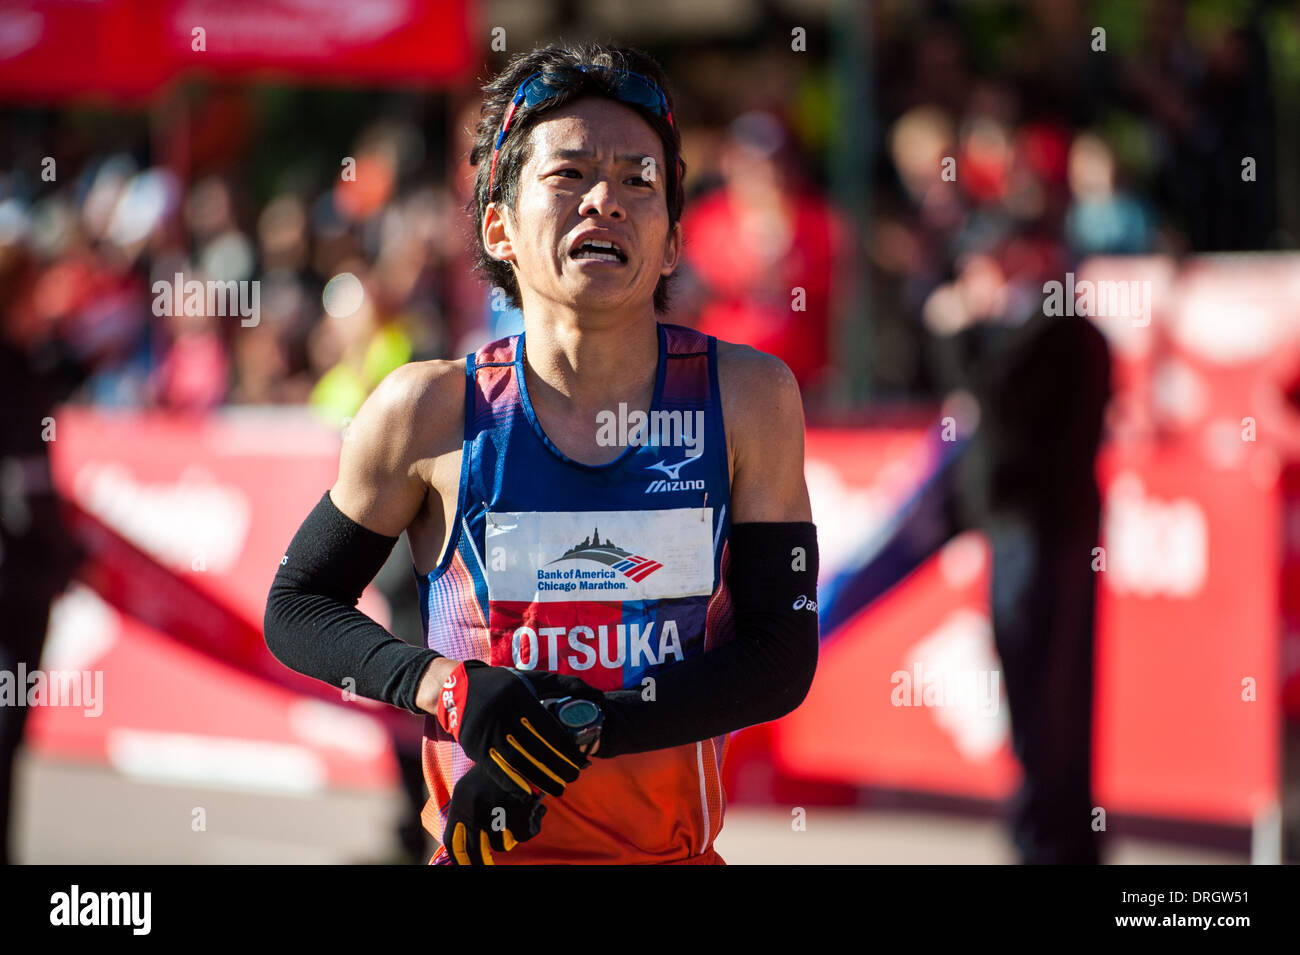 Yoshiki Otsuka crosses the finish line at the Bank of America Chicago Marathon on October 13, 2013. Stock Photo